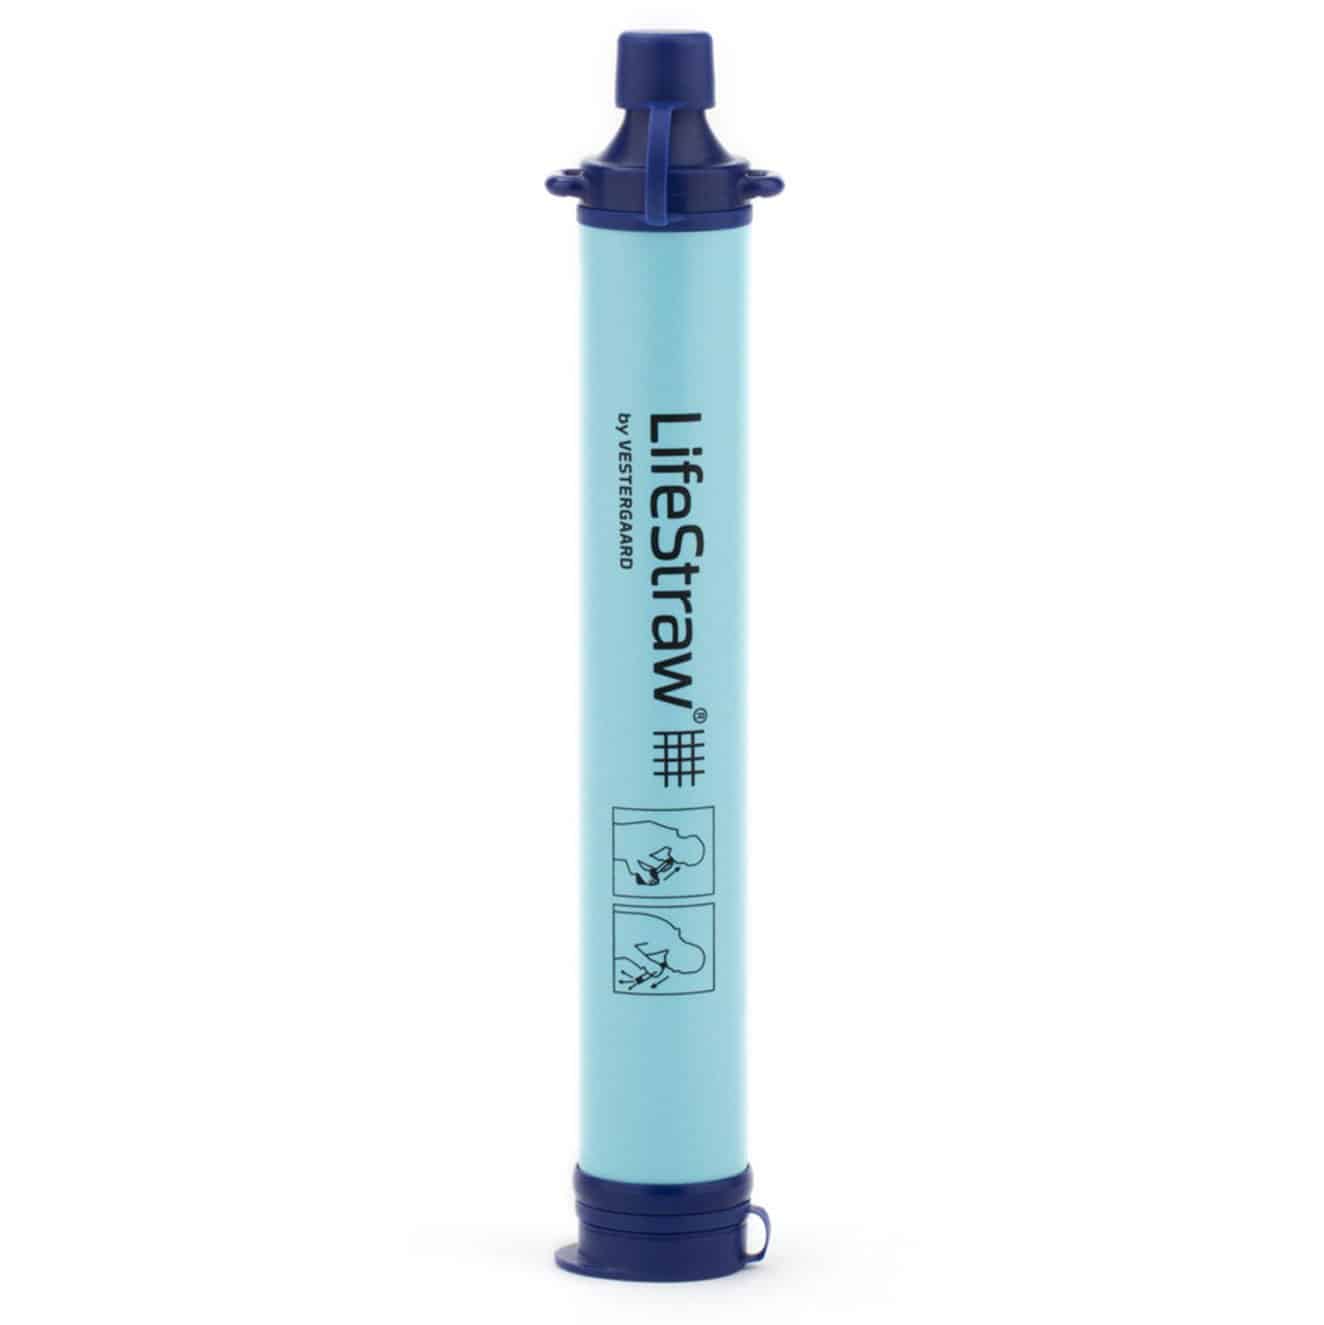 DEAL ALERT: LifeStraw Personal Water Filter 43% off!